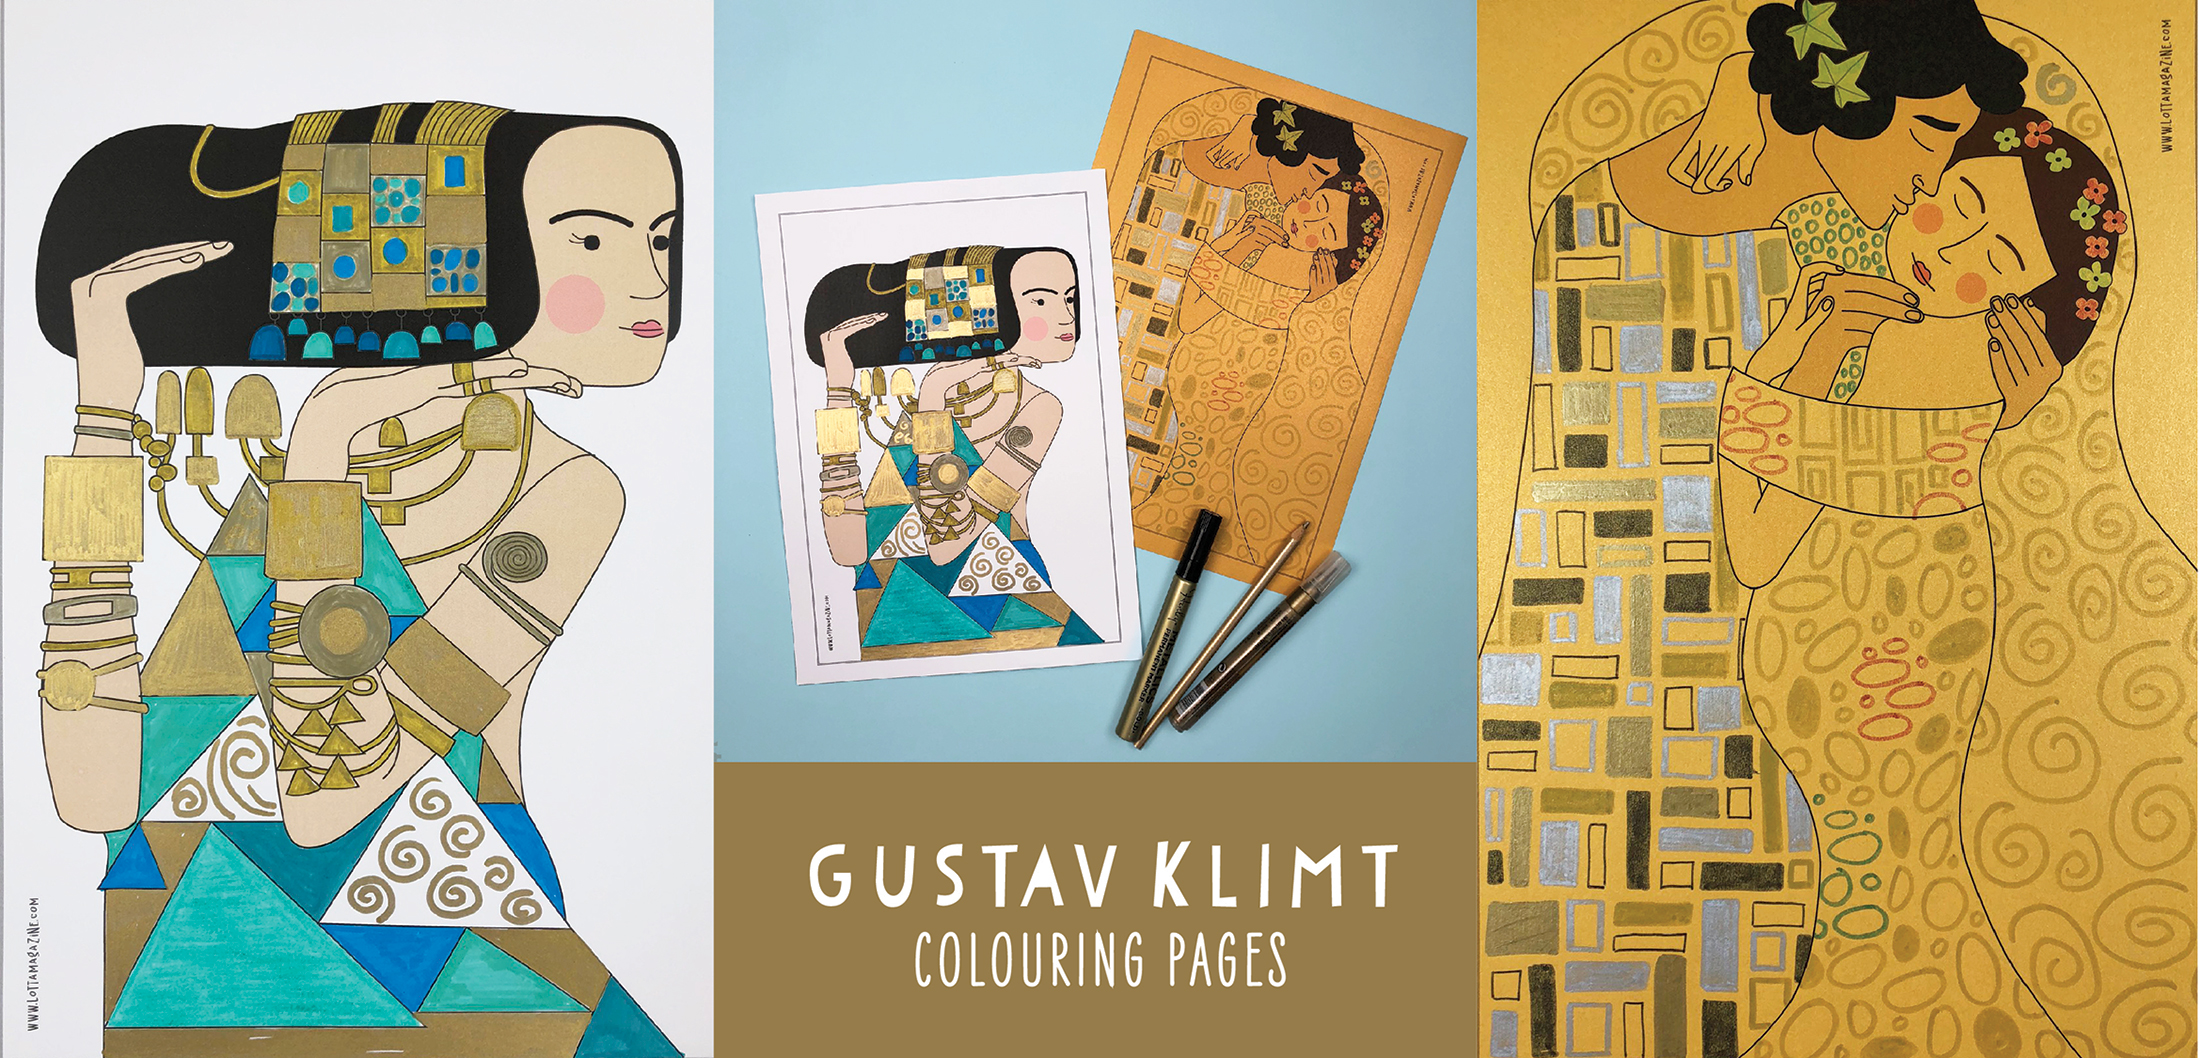 Gustav Klimt colouring pages for kids